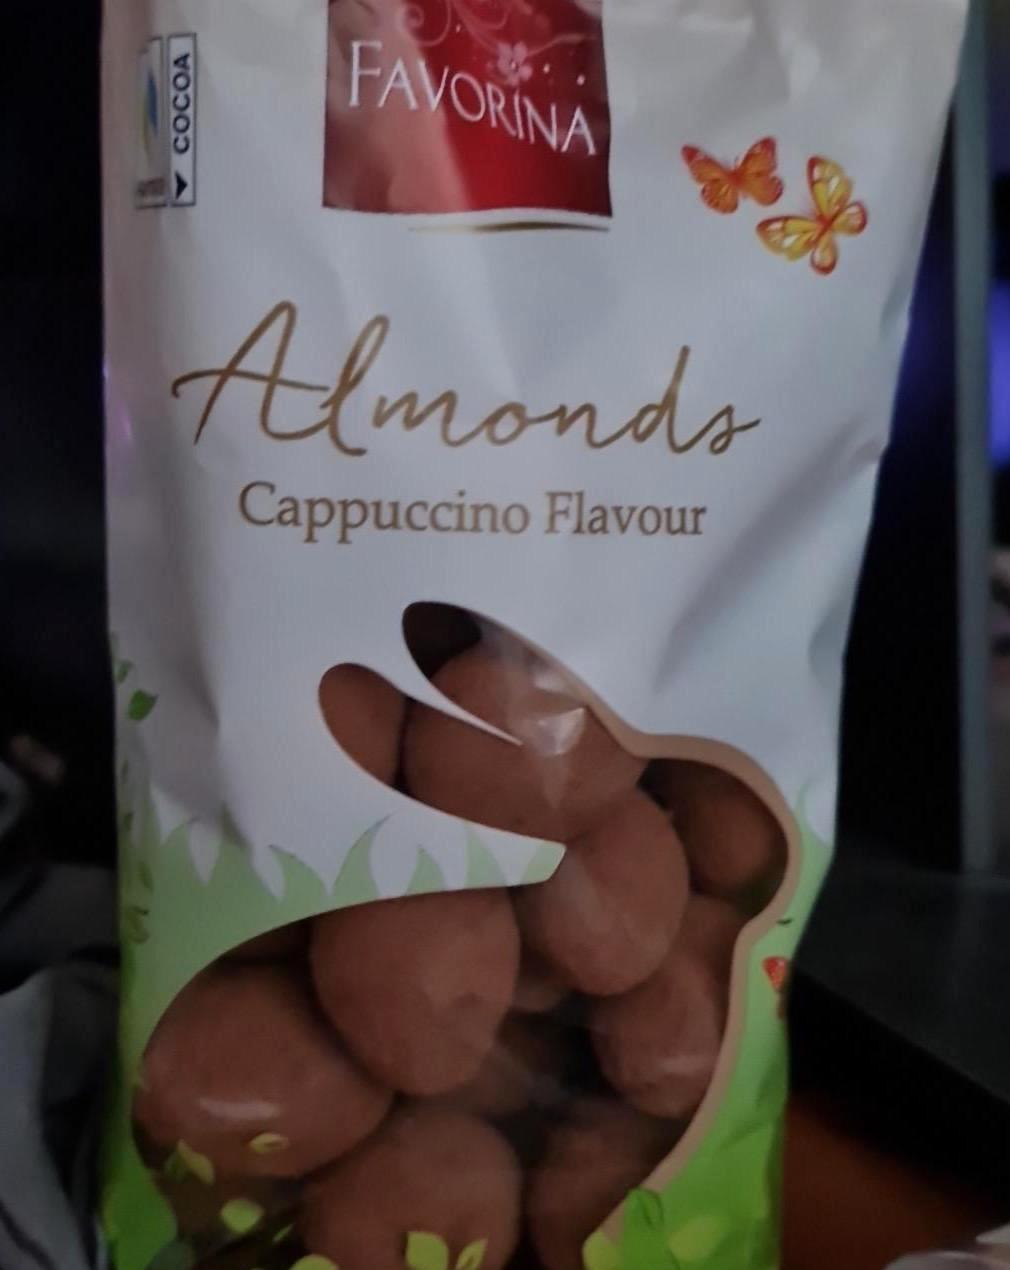 Képek - Almonds cappuccino flavour Favorina